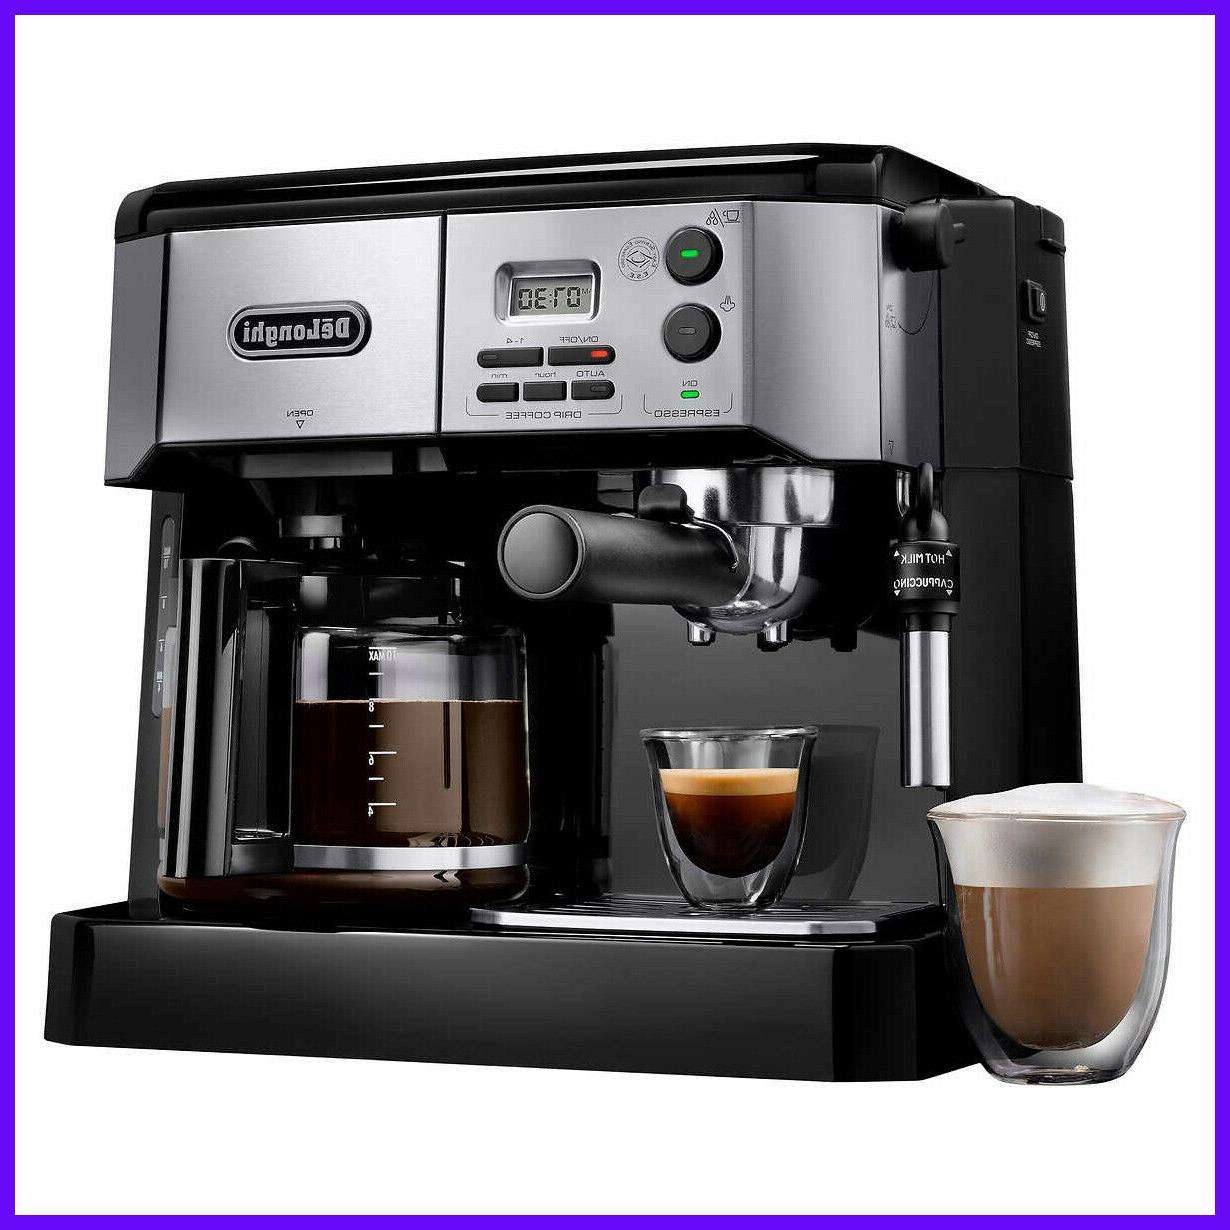 DeLonghi Espresso and Drip Coffee System, Coffee Maker